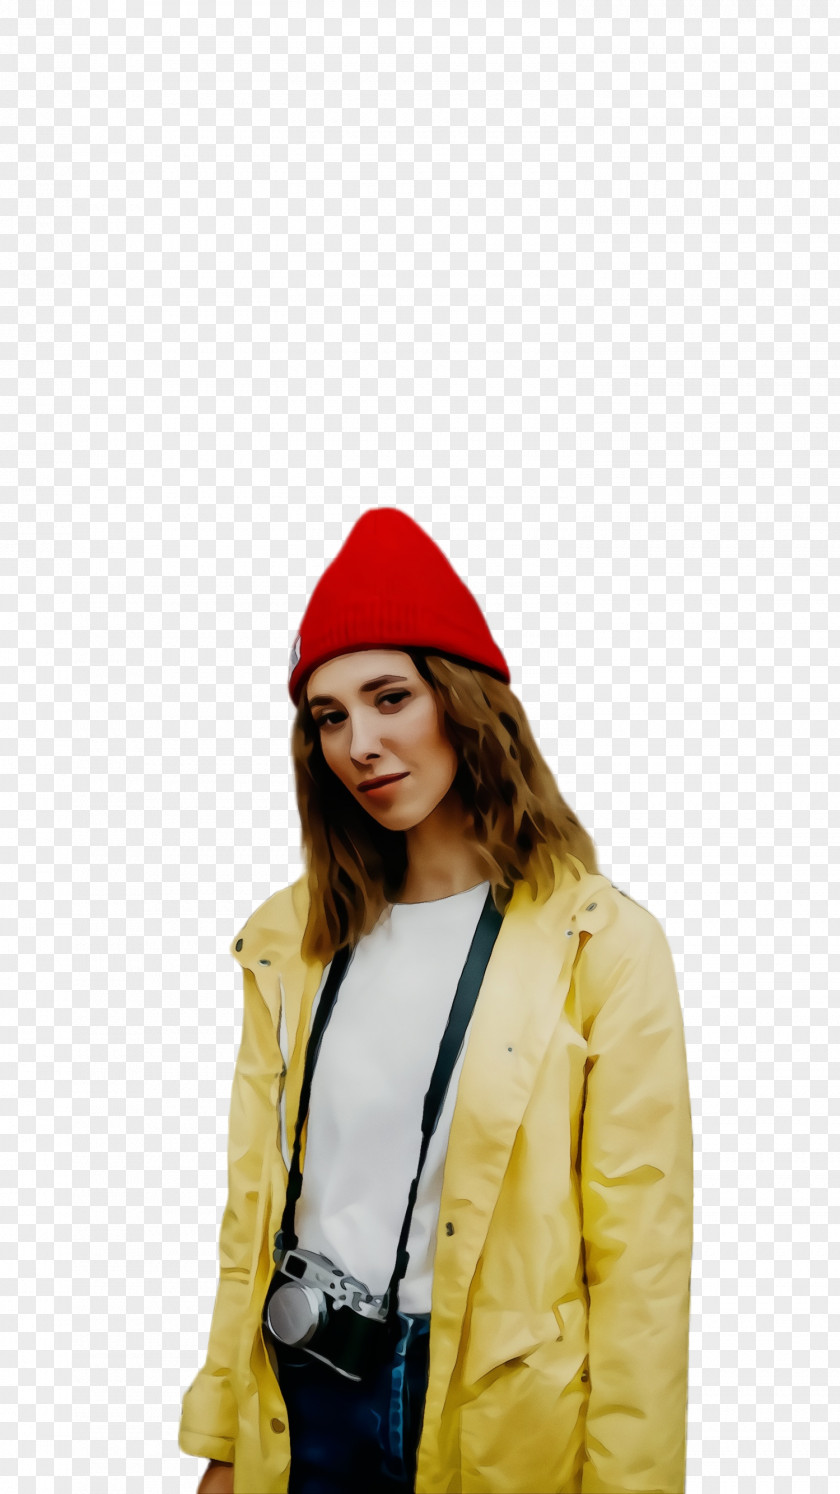 Hat Knit Cap Beanie Clothing Outerwear Headgear PNG